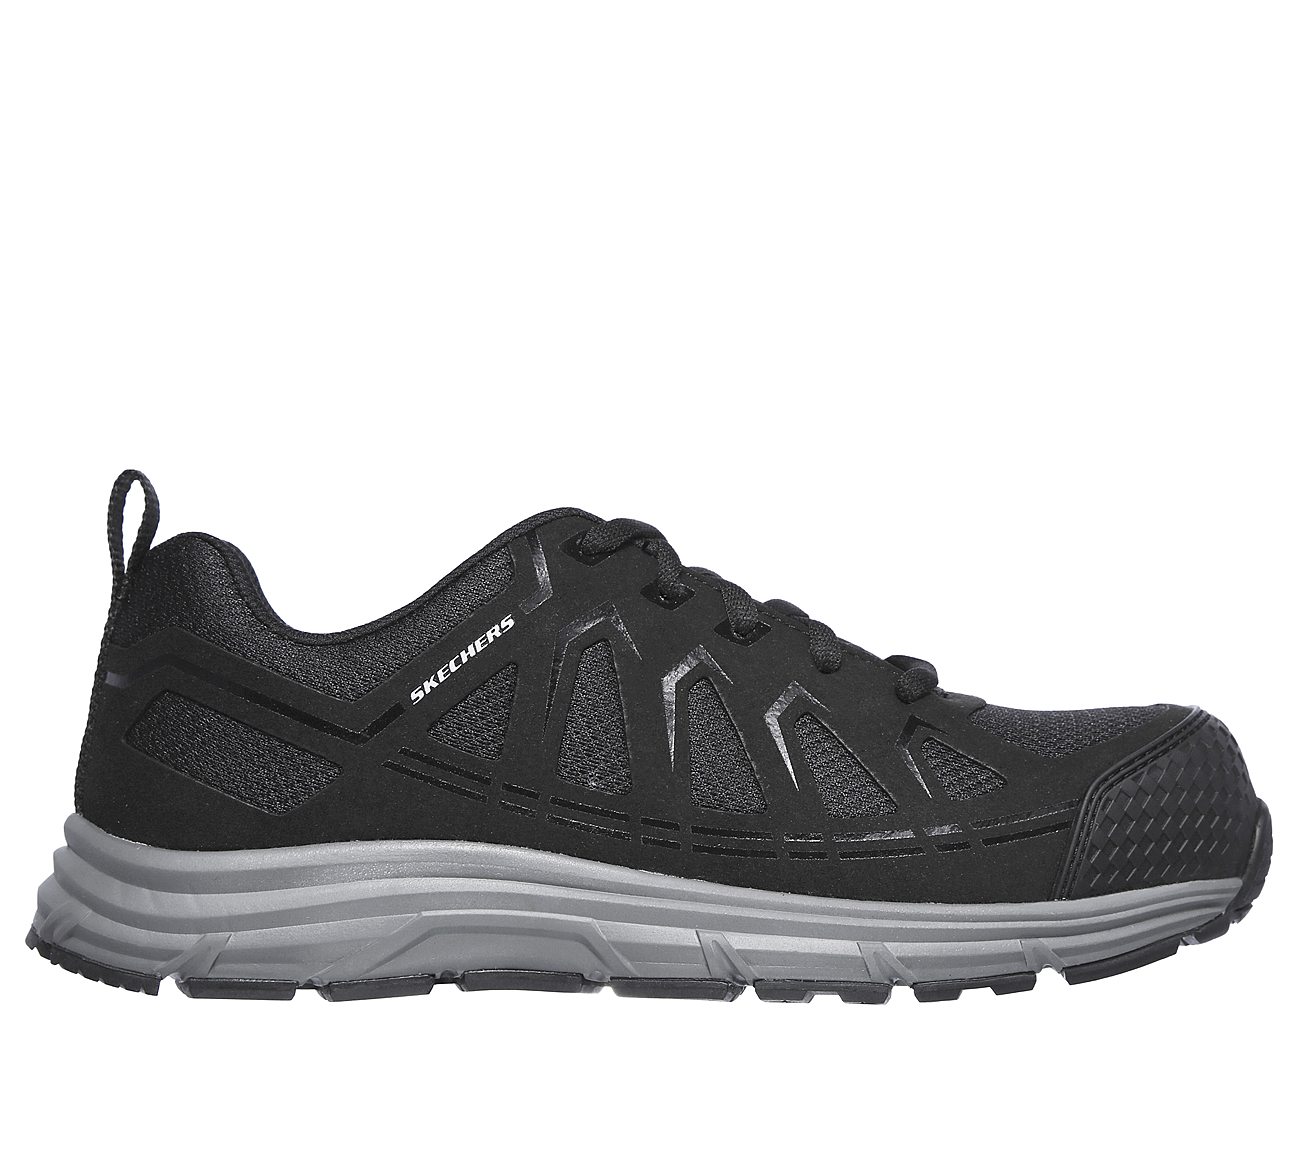 Buy SKECHERS Work: Malad Comp Toe Work Shoes